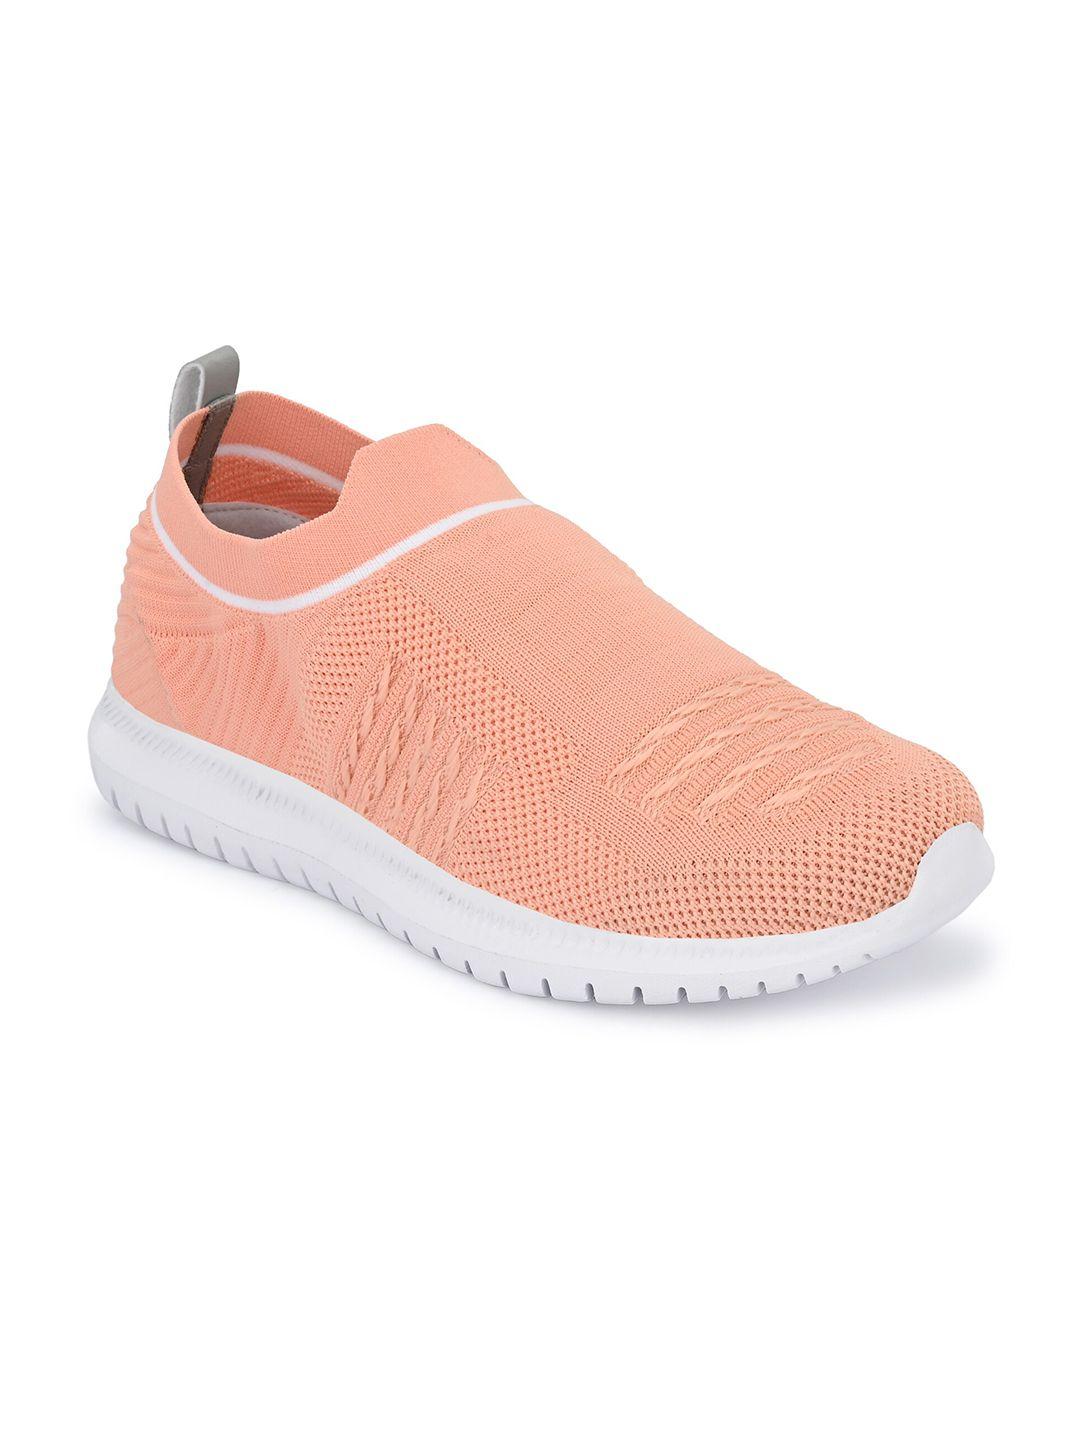 off limits women peach-coloured mesh walking non-marking shoes